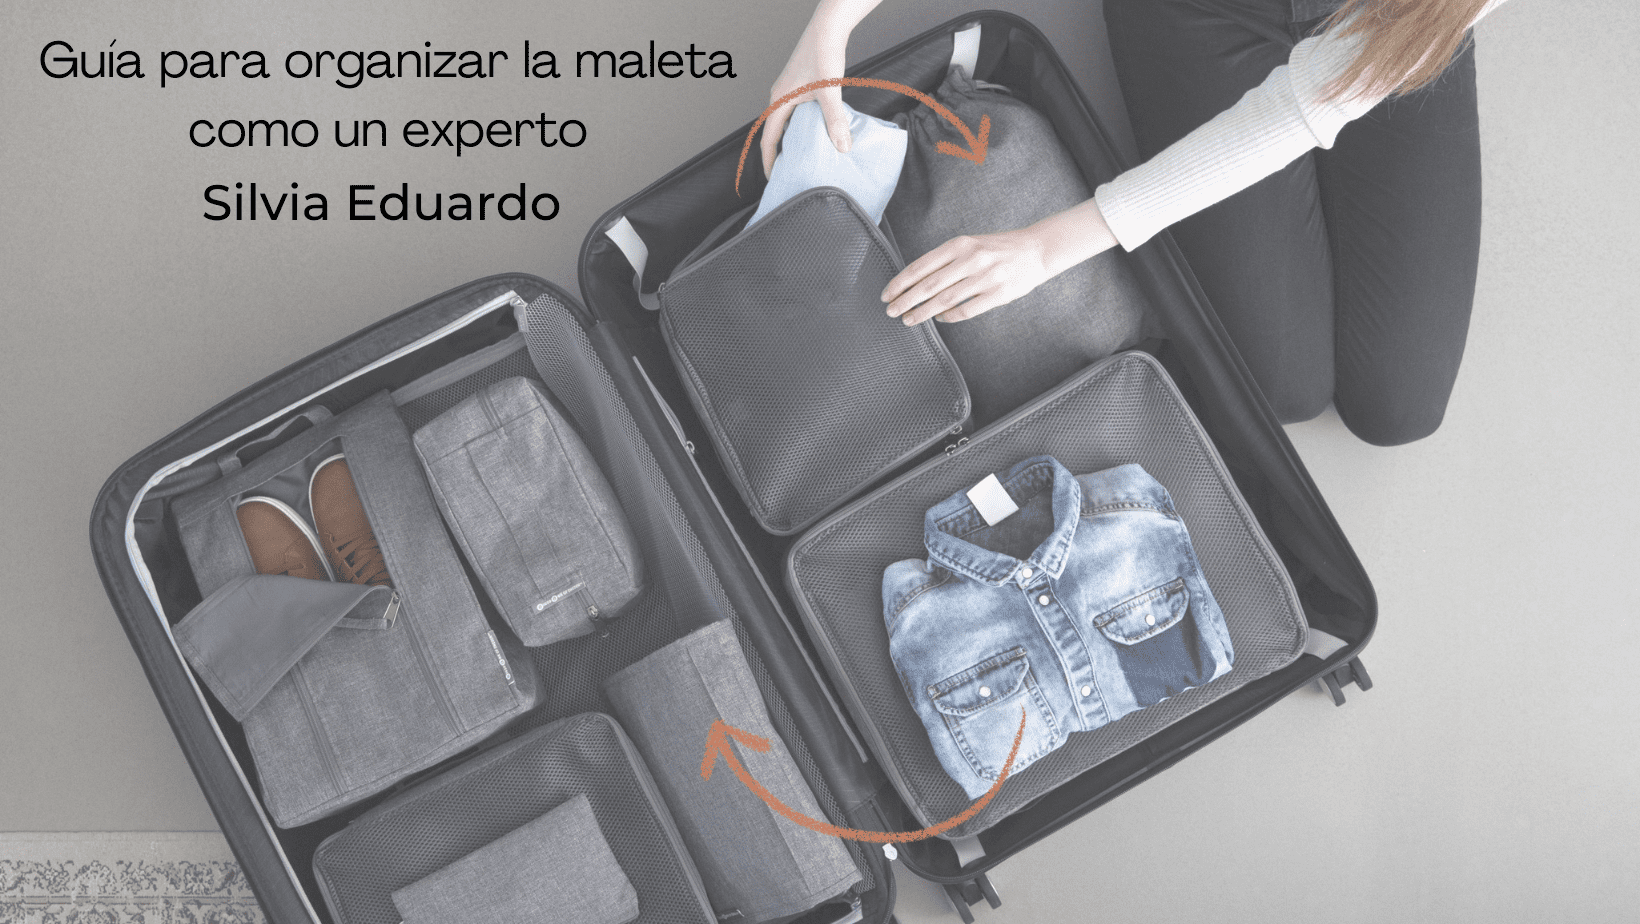 Guía para organizar la maleta como un experto